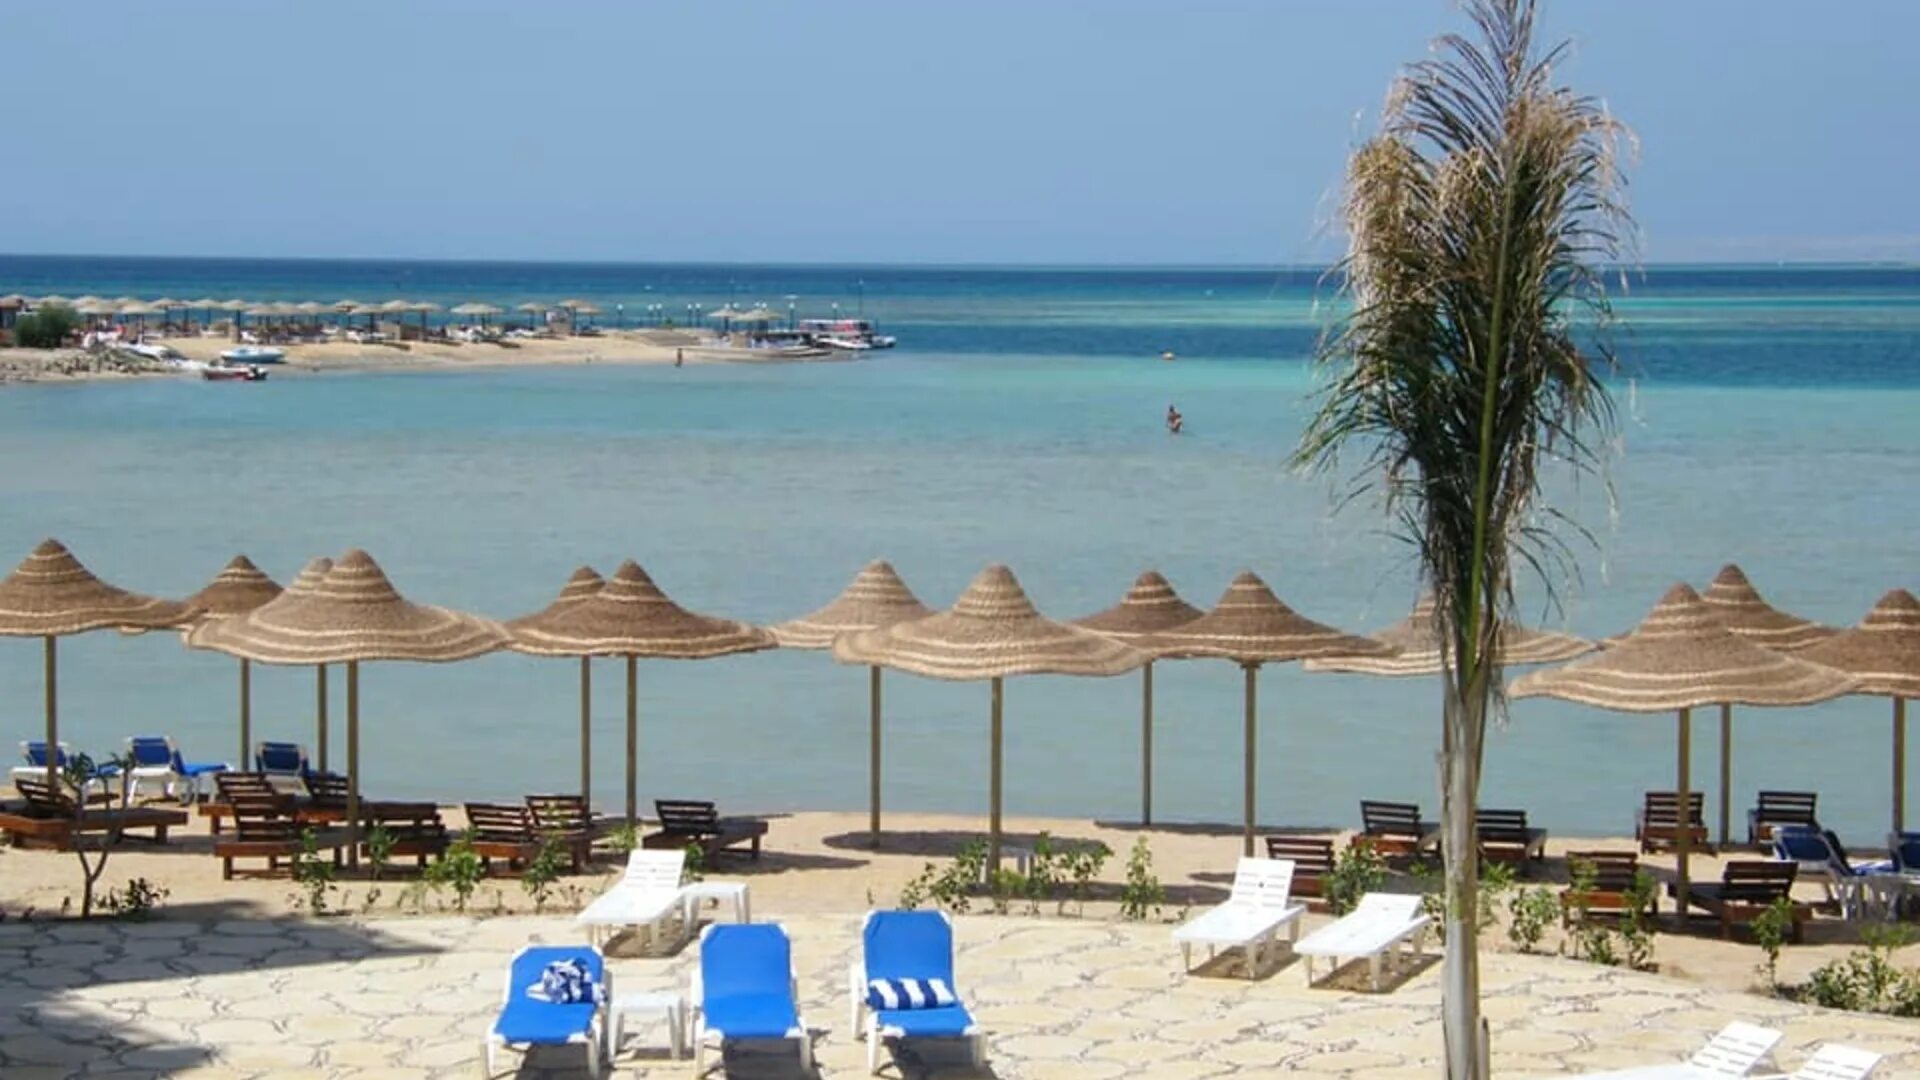 Magic хургада. Хургада отель Мэджик. Magic Beach Hotel Хургада. Magic Beach Resort Hurghada 4 Хургада. Magic Beach Hotel 4 Египет.